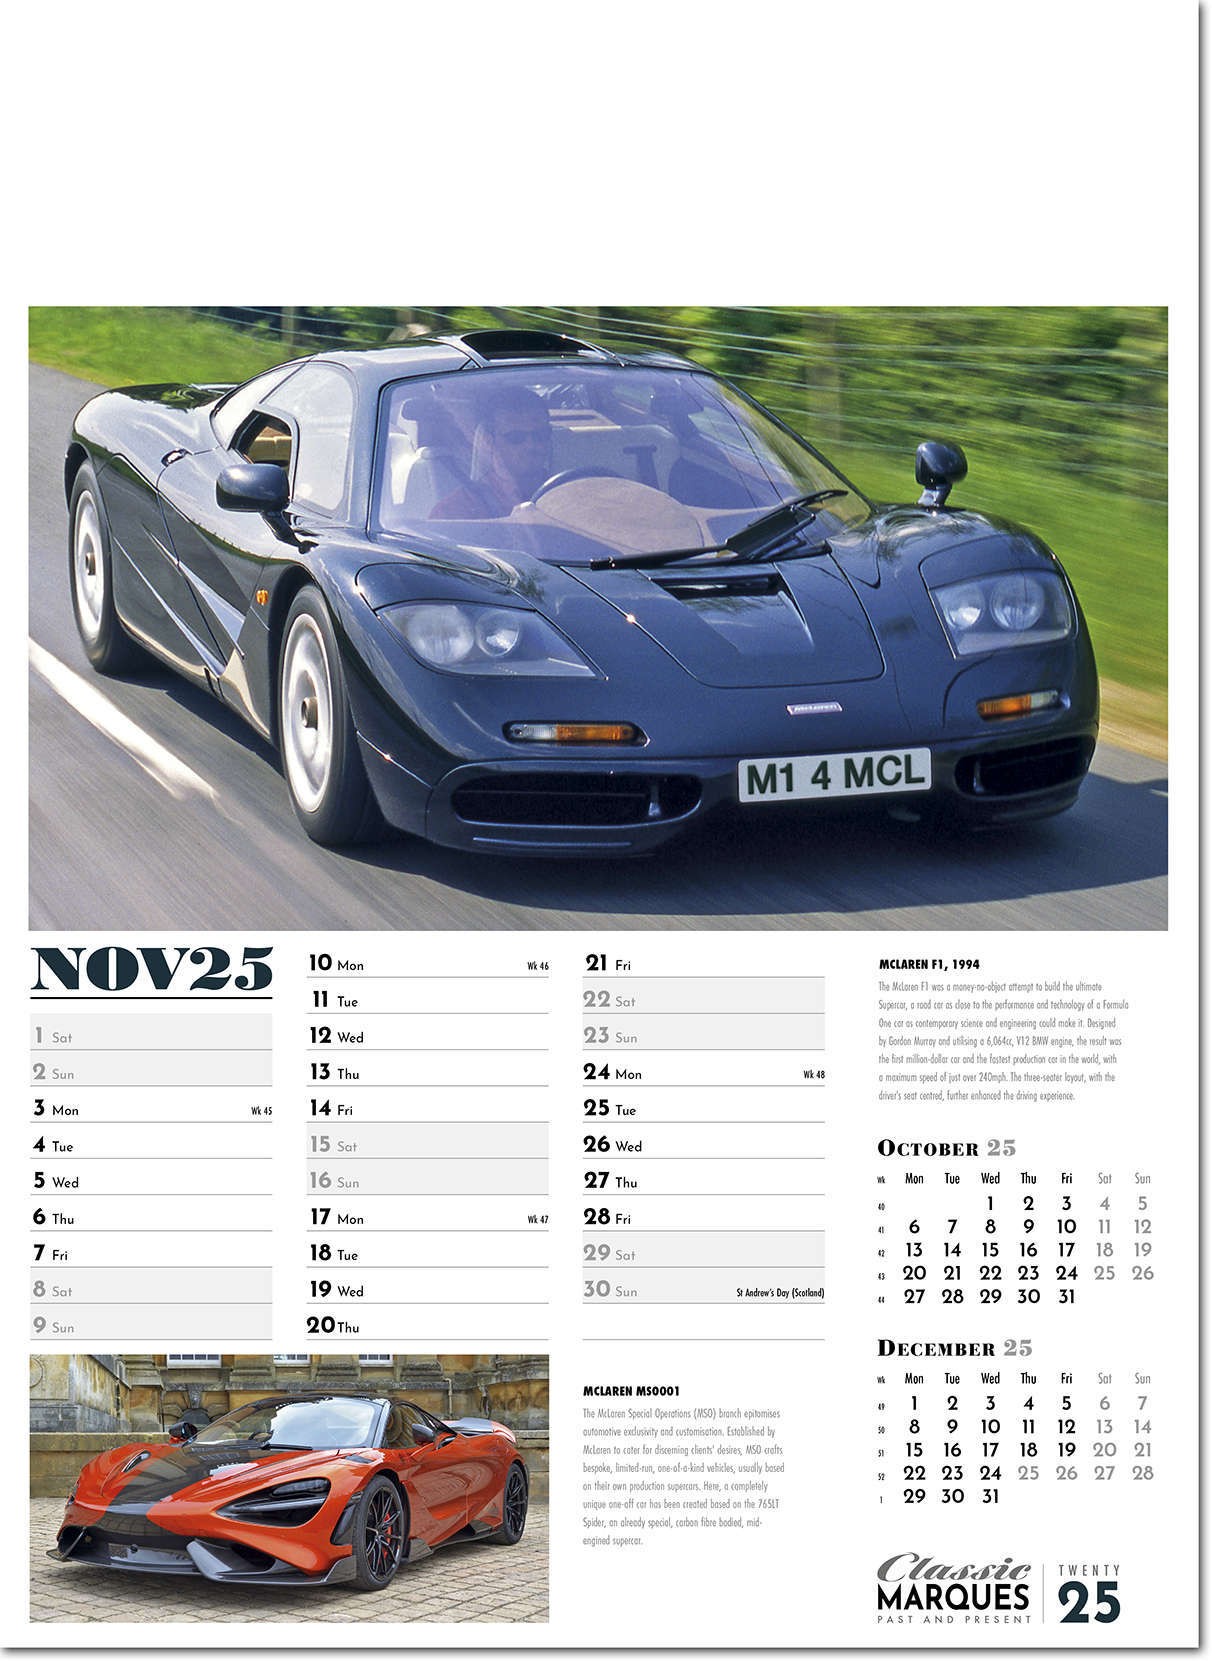 Classic Marques Past and Present Calendar